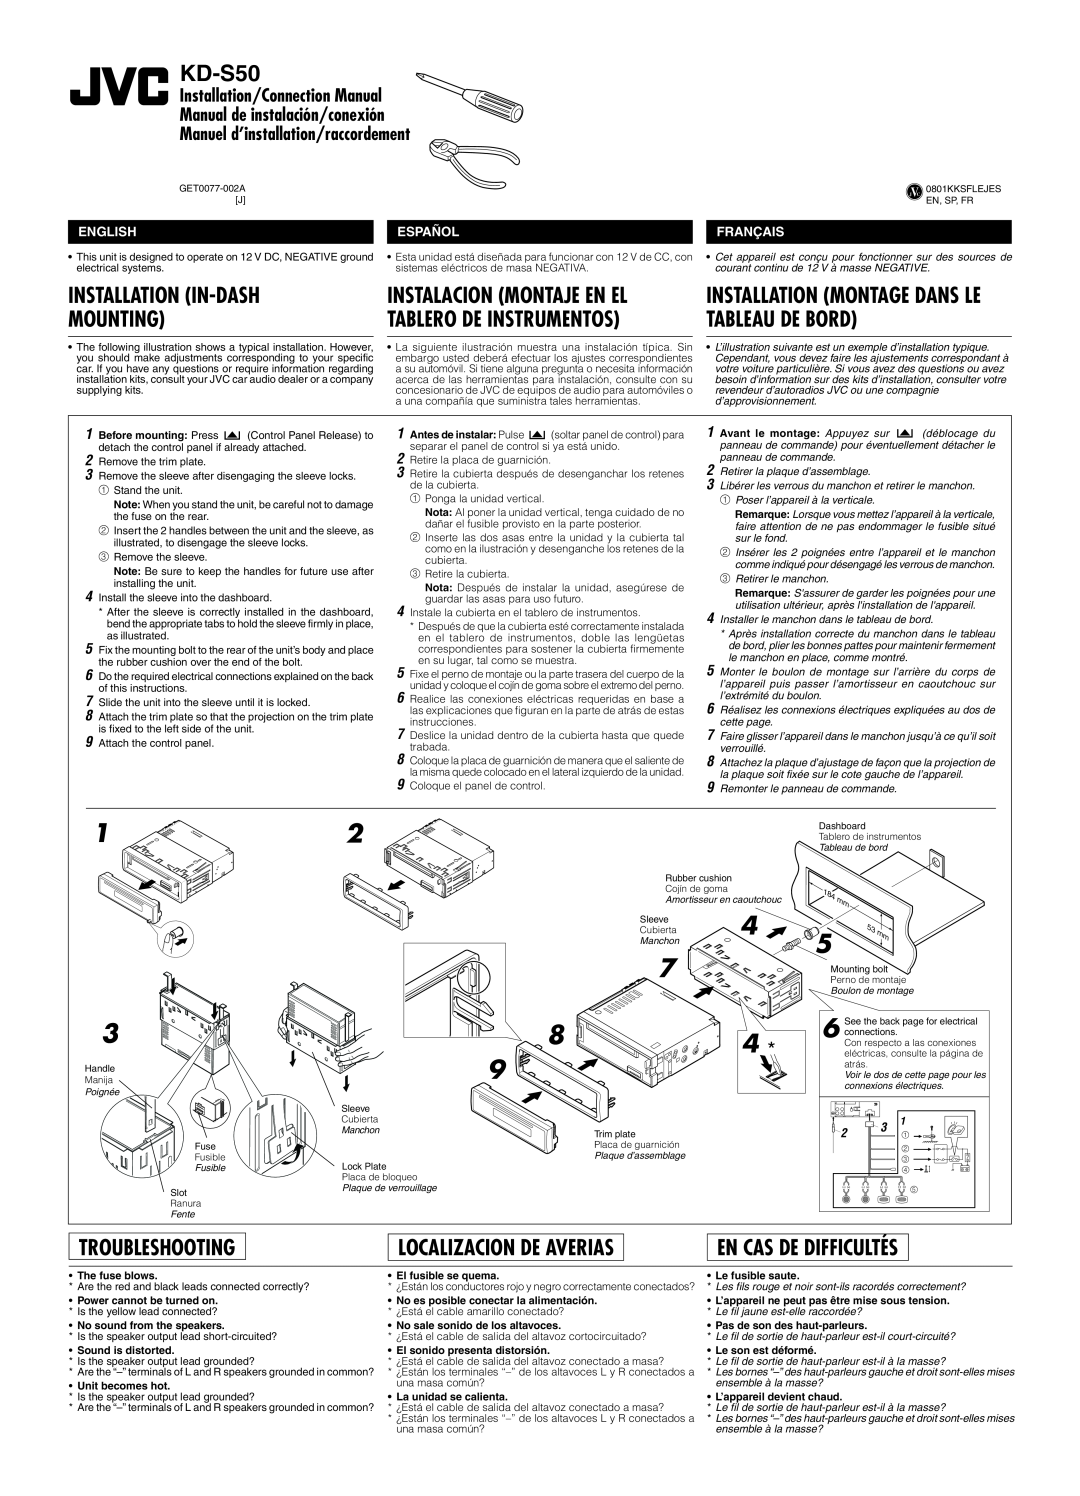 JVC KD-S50 manual Installation In-Dash Mounting, Troubleshooting, Localizacion De Averias, En Cas De Difficultés, English 